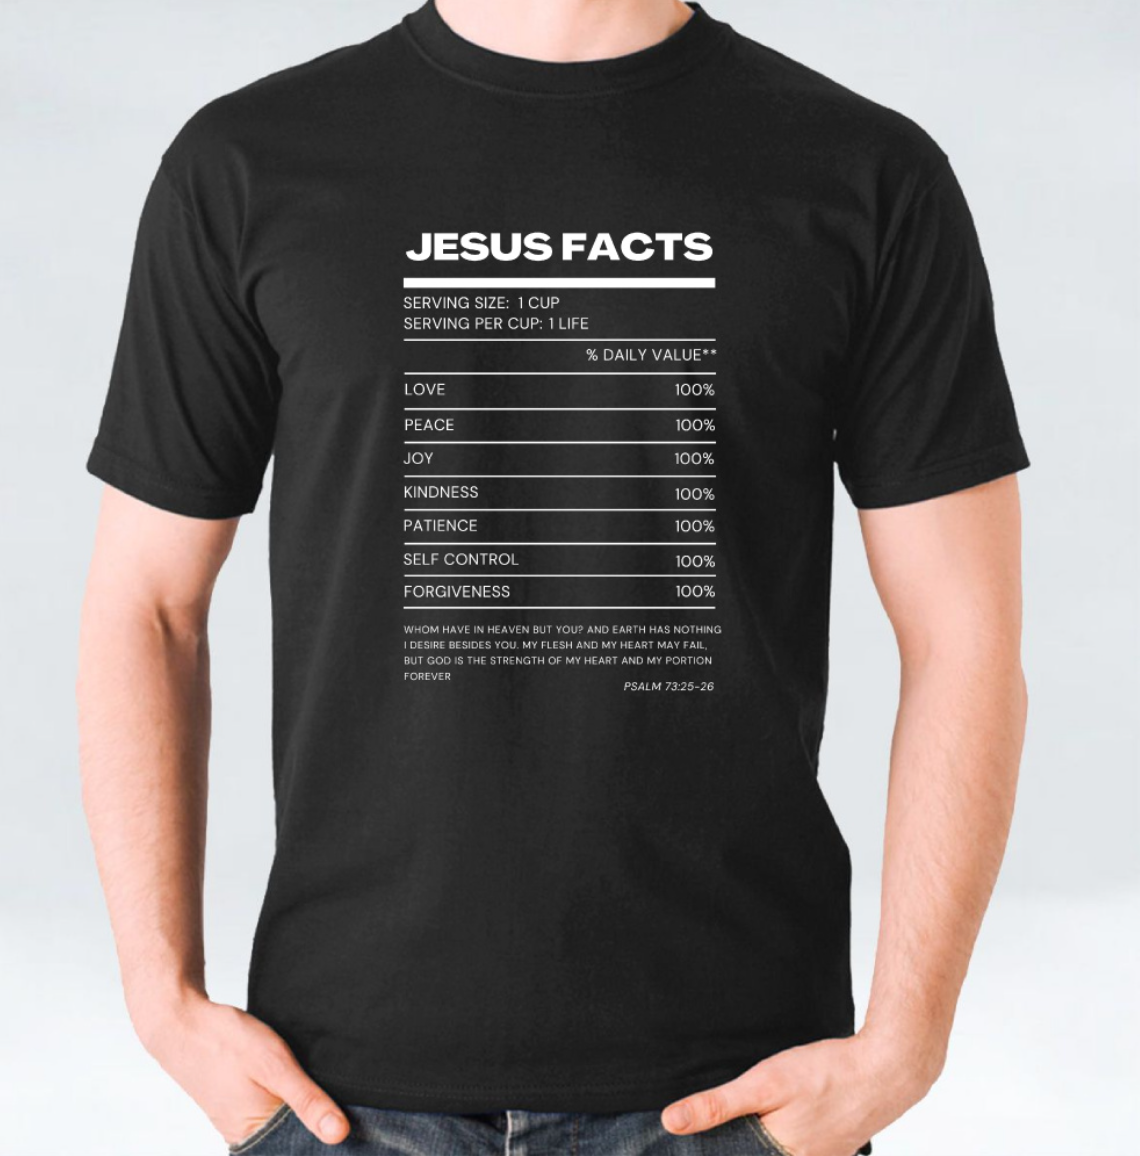 Jesus Facts Unisex T-shirt - White/Black/Grey/Sand/Navy/Maroon